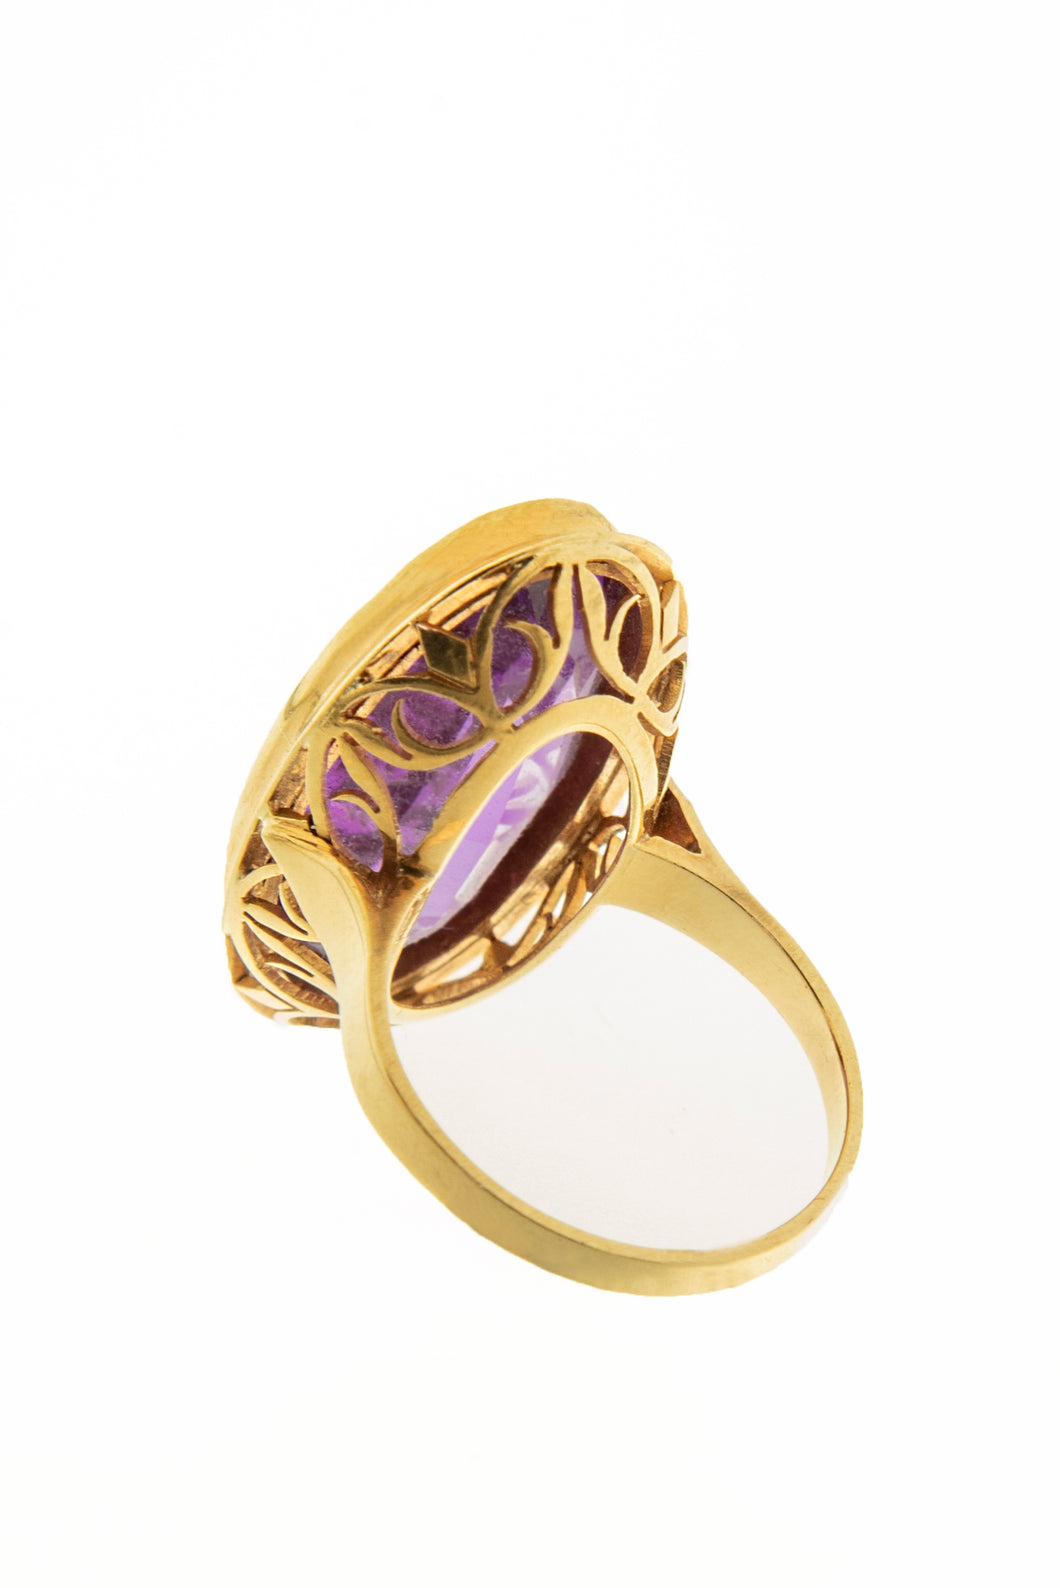 ATHENA YELLOW GOLD AMETHYST RING Χρυσό δαχτυλίδι